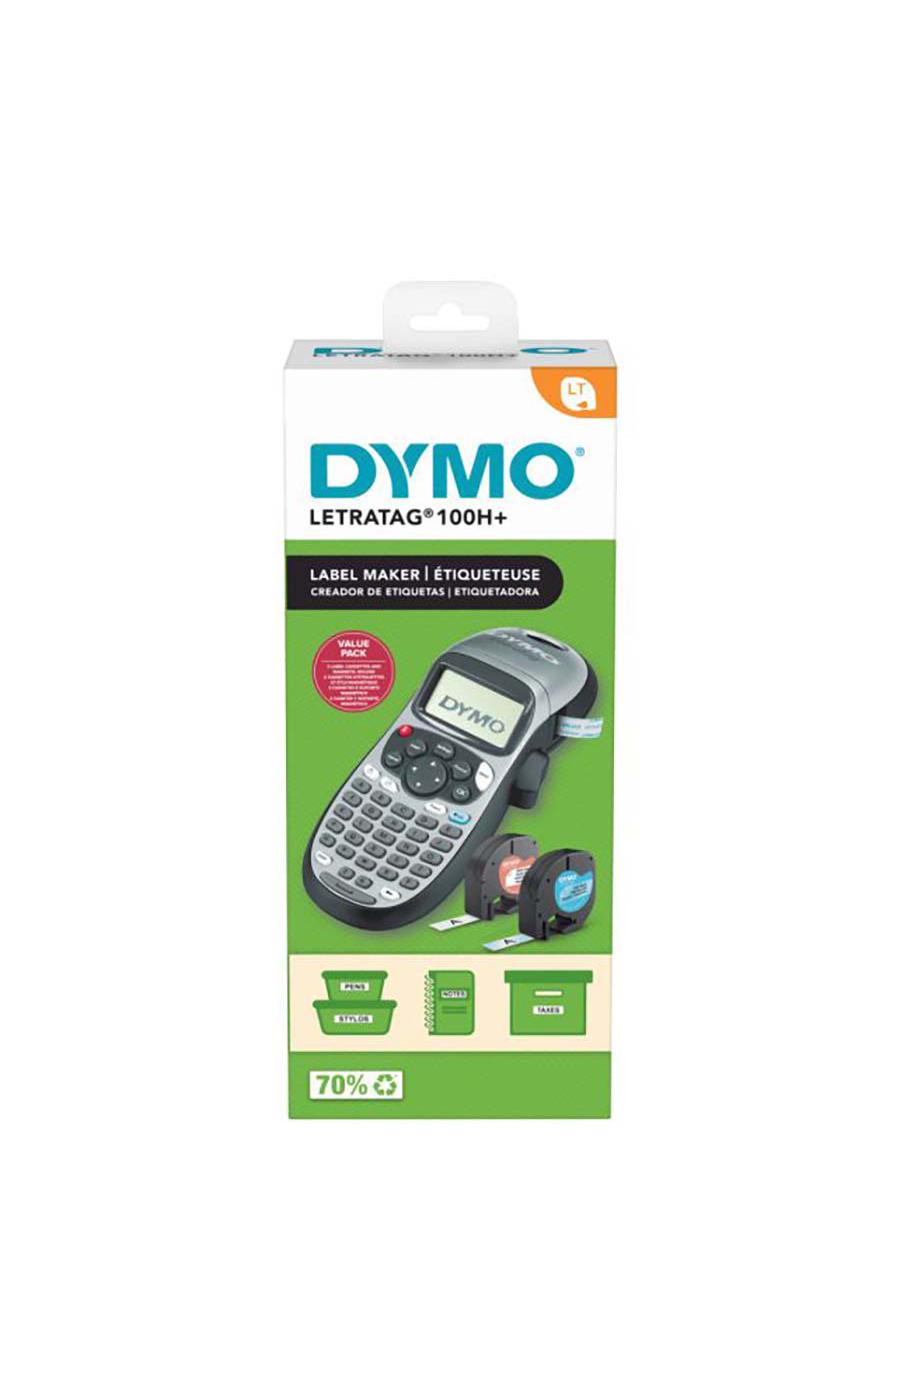 DYMO LetraTag 100H Plus Label Maker Kit; image 1 of 2